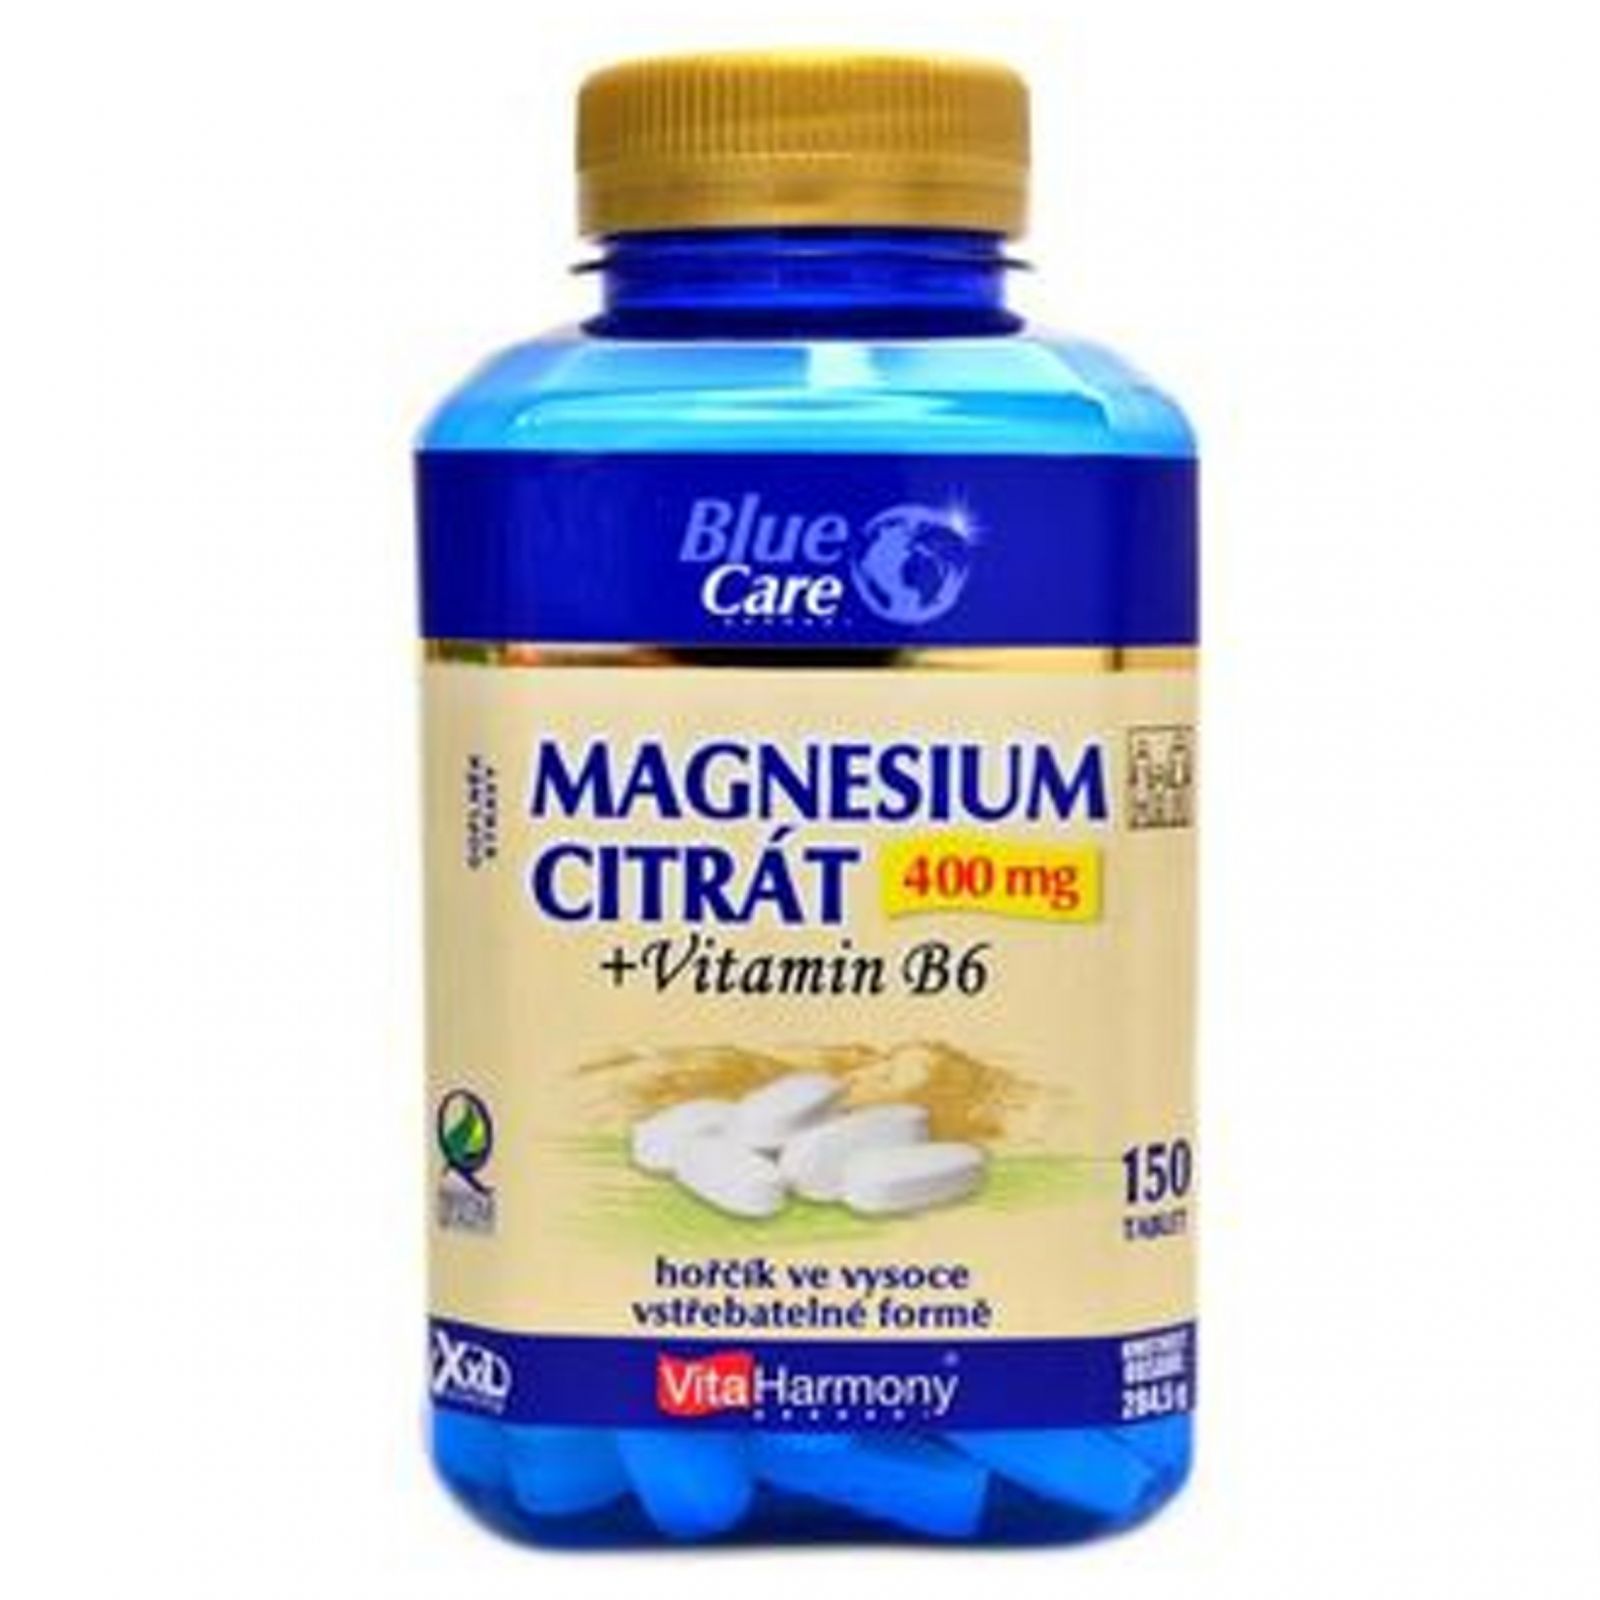 VitaHarmony Magnesium citrát 400 mg + vitamin B6 – 150 tablet